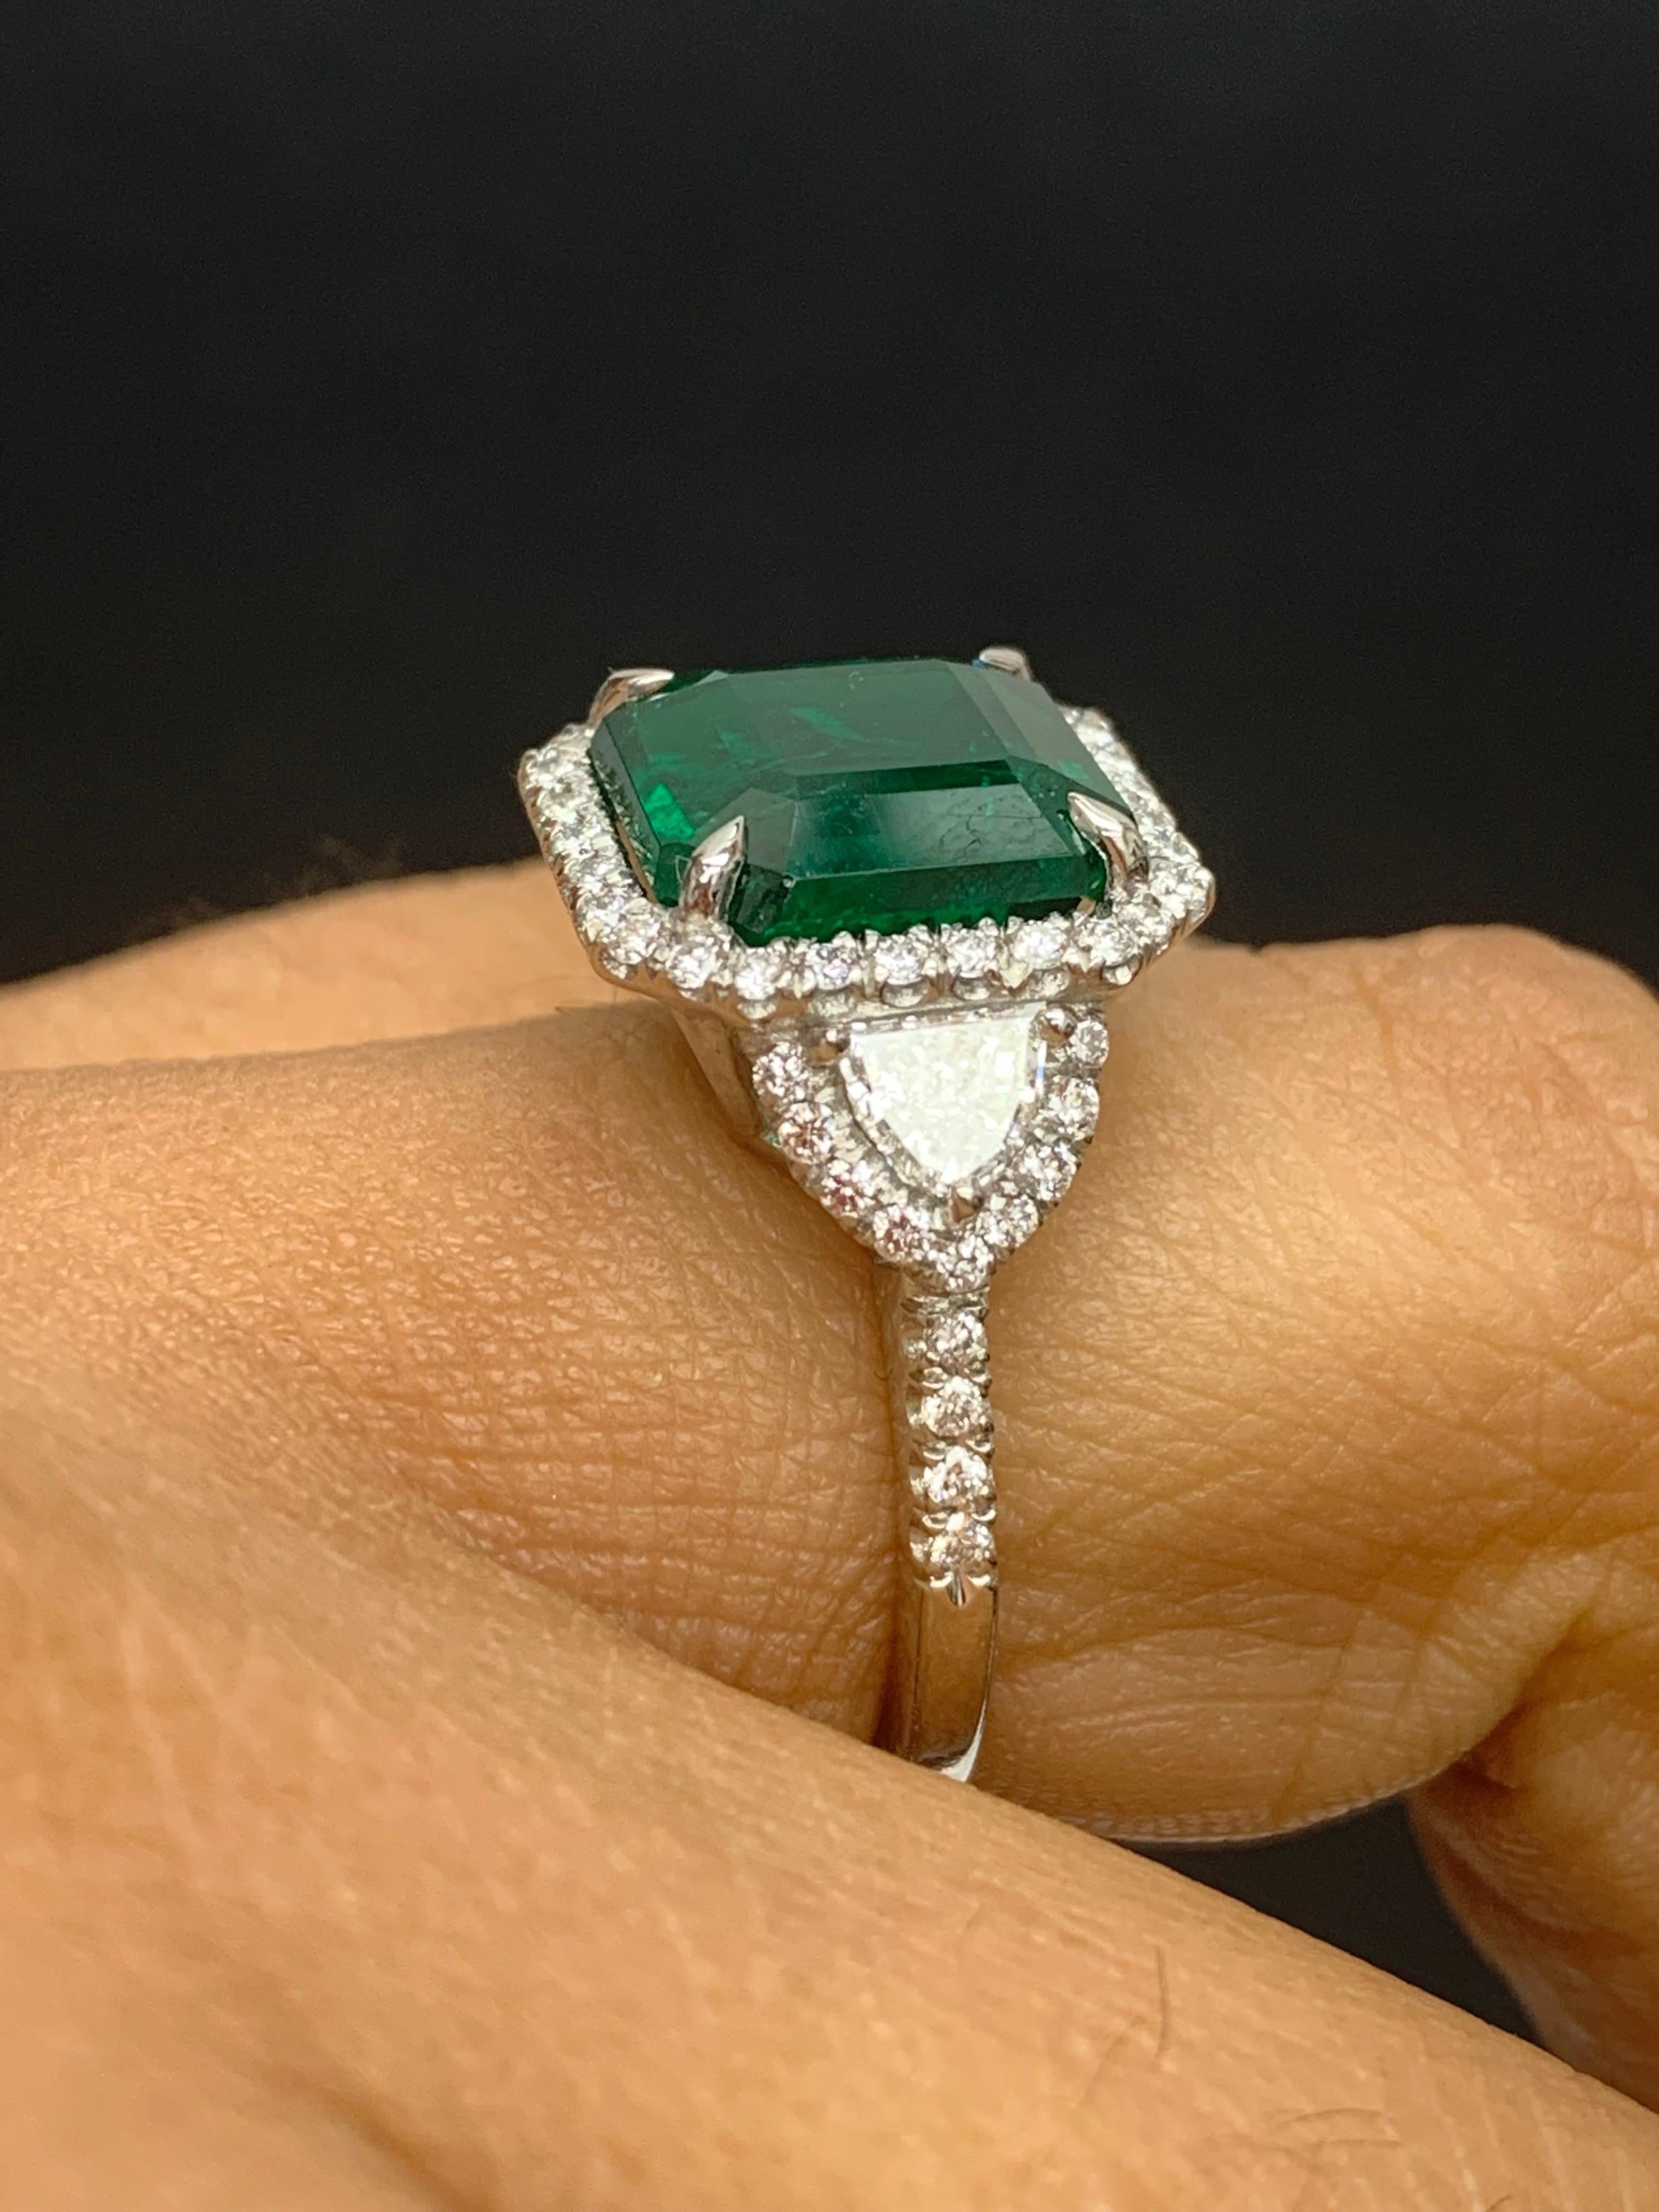 Certified 5.23 Carat Emerald Cut Emerald Diamond 3 Stone Halo Ring in Platinum For Sale 1